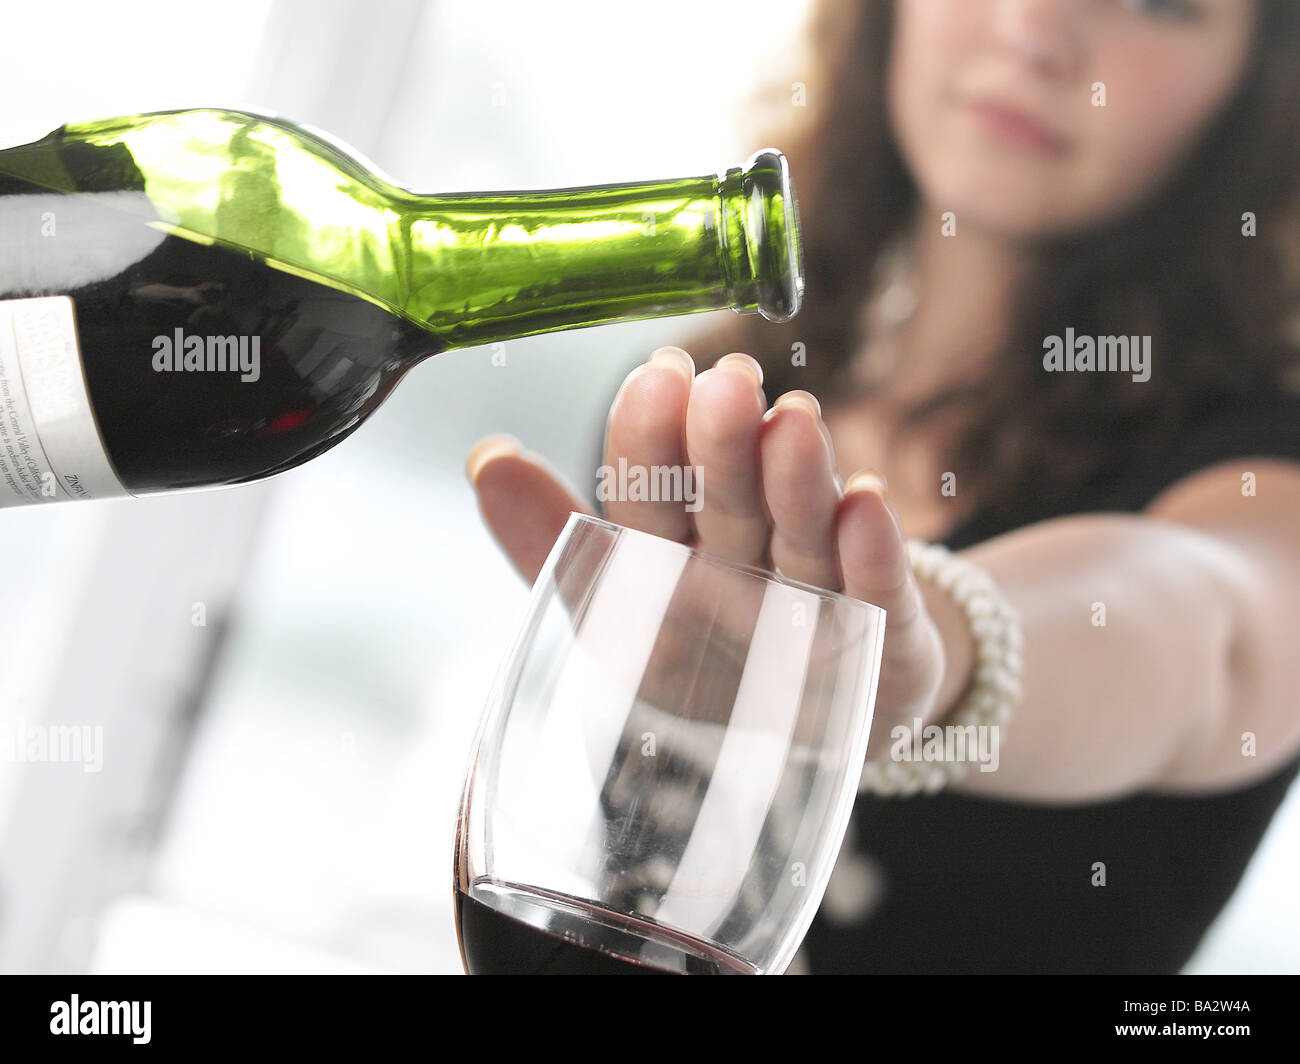 Frau junge Hand rot-Wein-Glas-Flasche hält die geschlossenen Detail Unschärfe Serie Leute Party Feier Party Getränke Alkohol Stockfoto